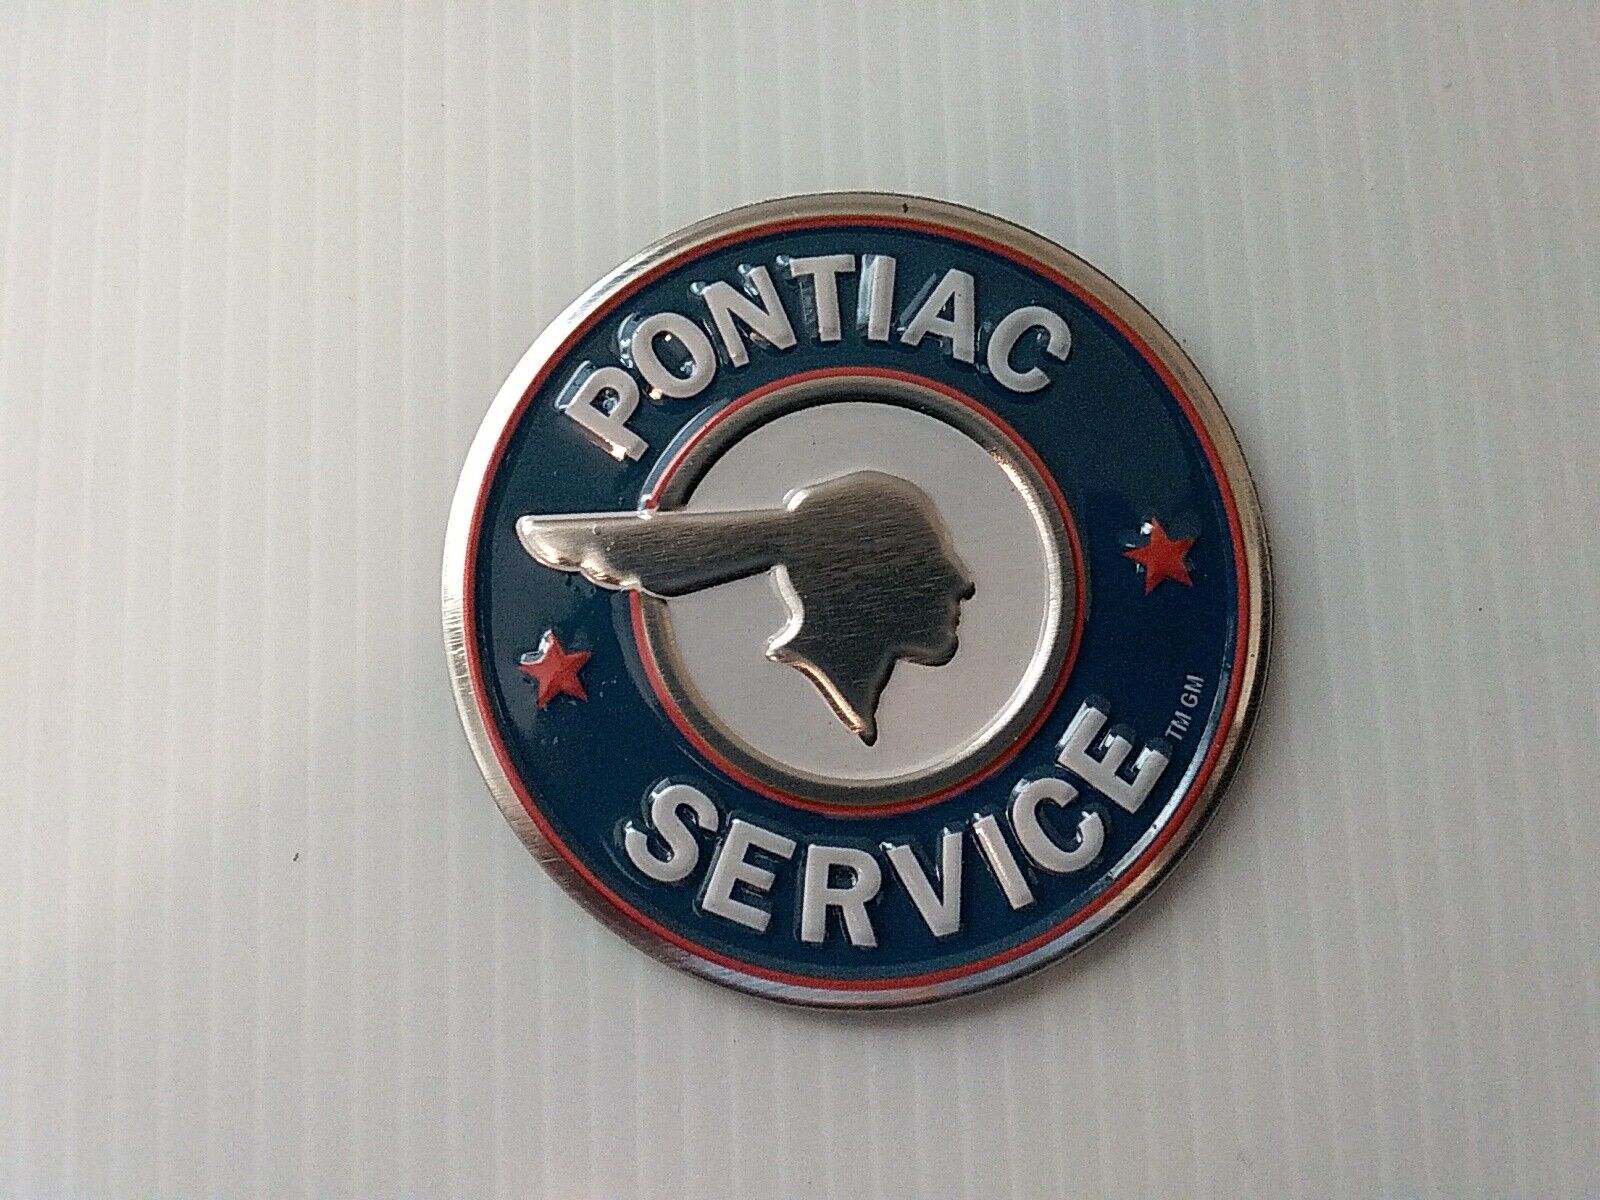 PONTIAC SERVICE LOGO METAL FRIDGE MAGNET 